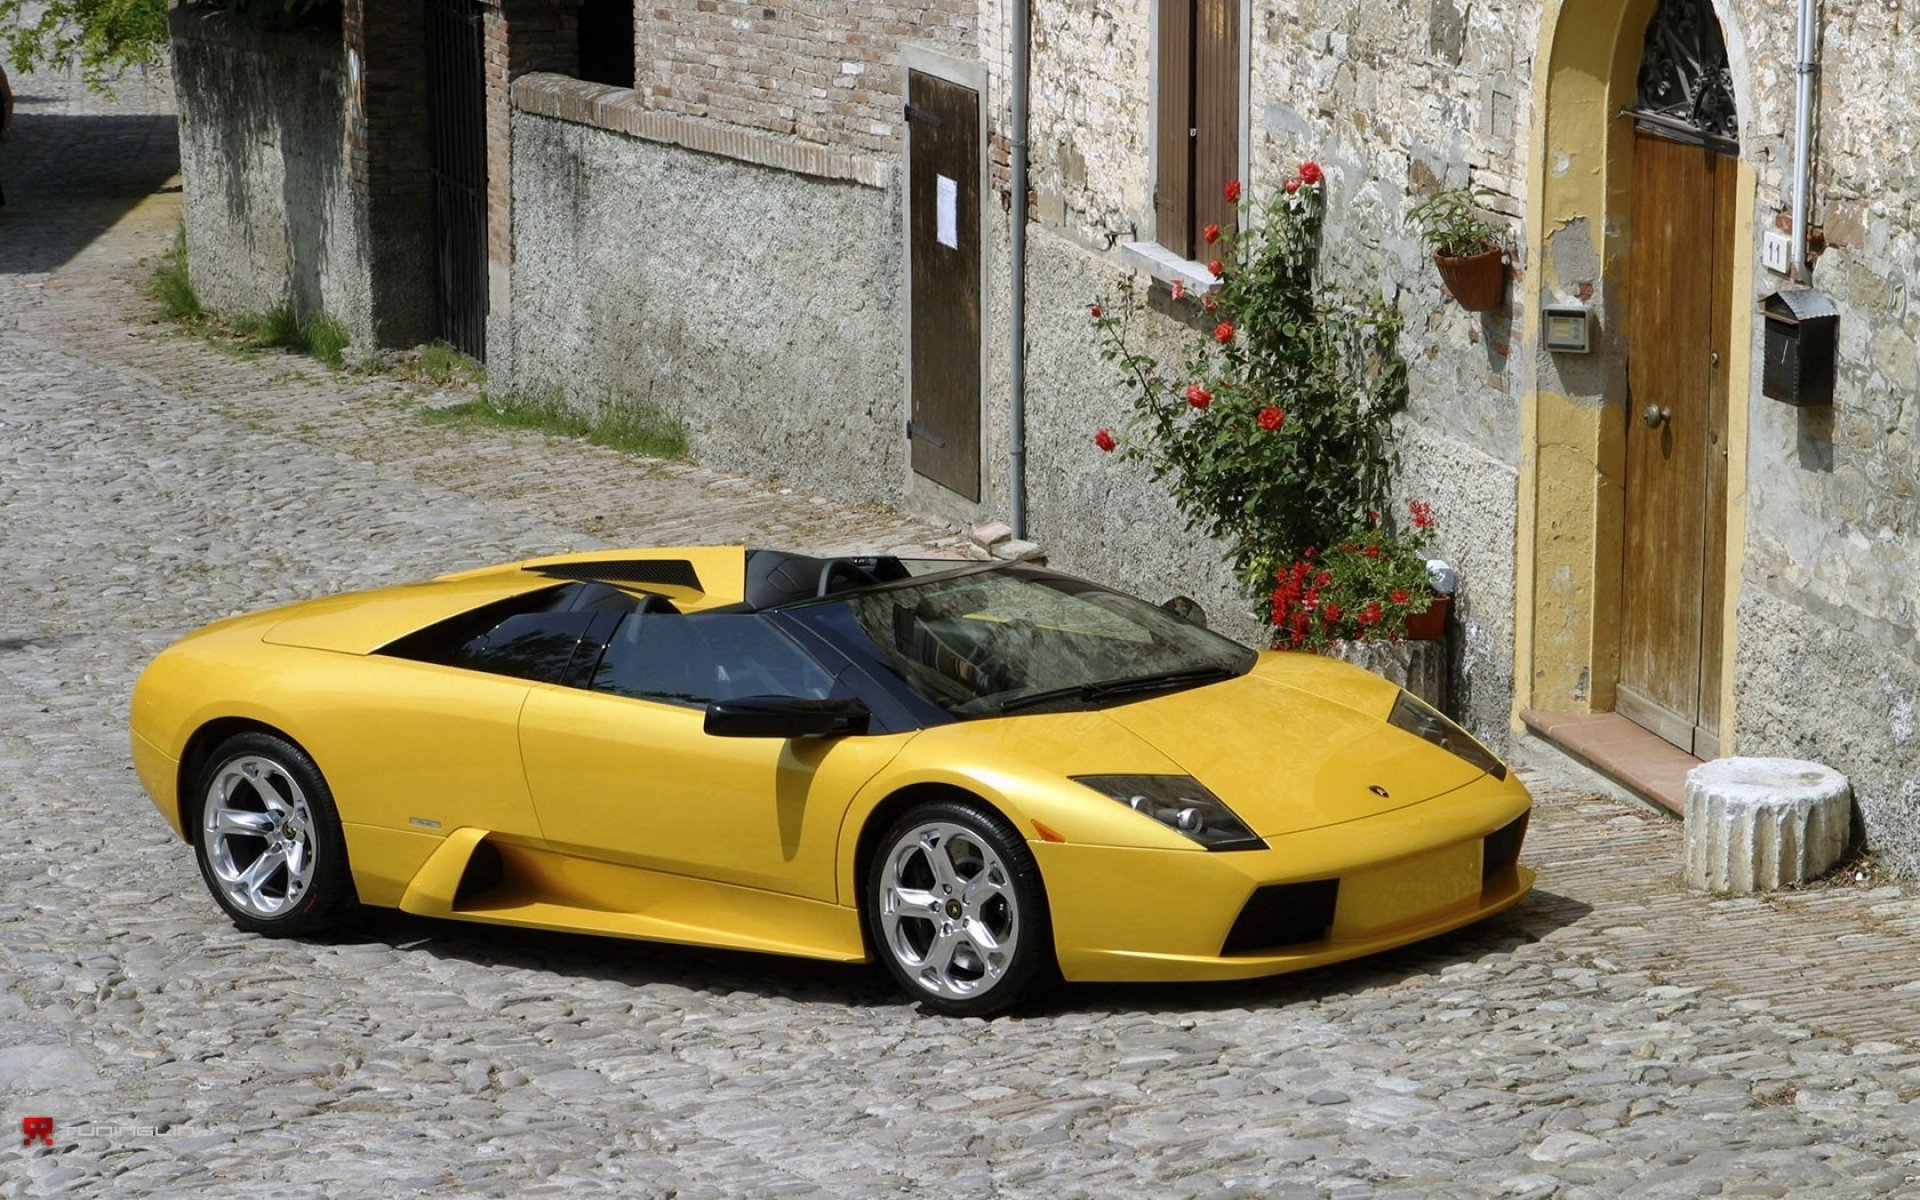 Best Lamborghini Murcielago background ID:155310 for High Resolution hd 1920x1200 desktop